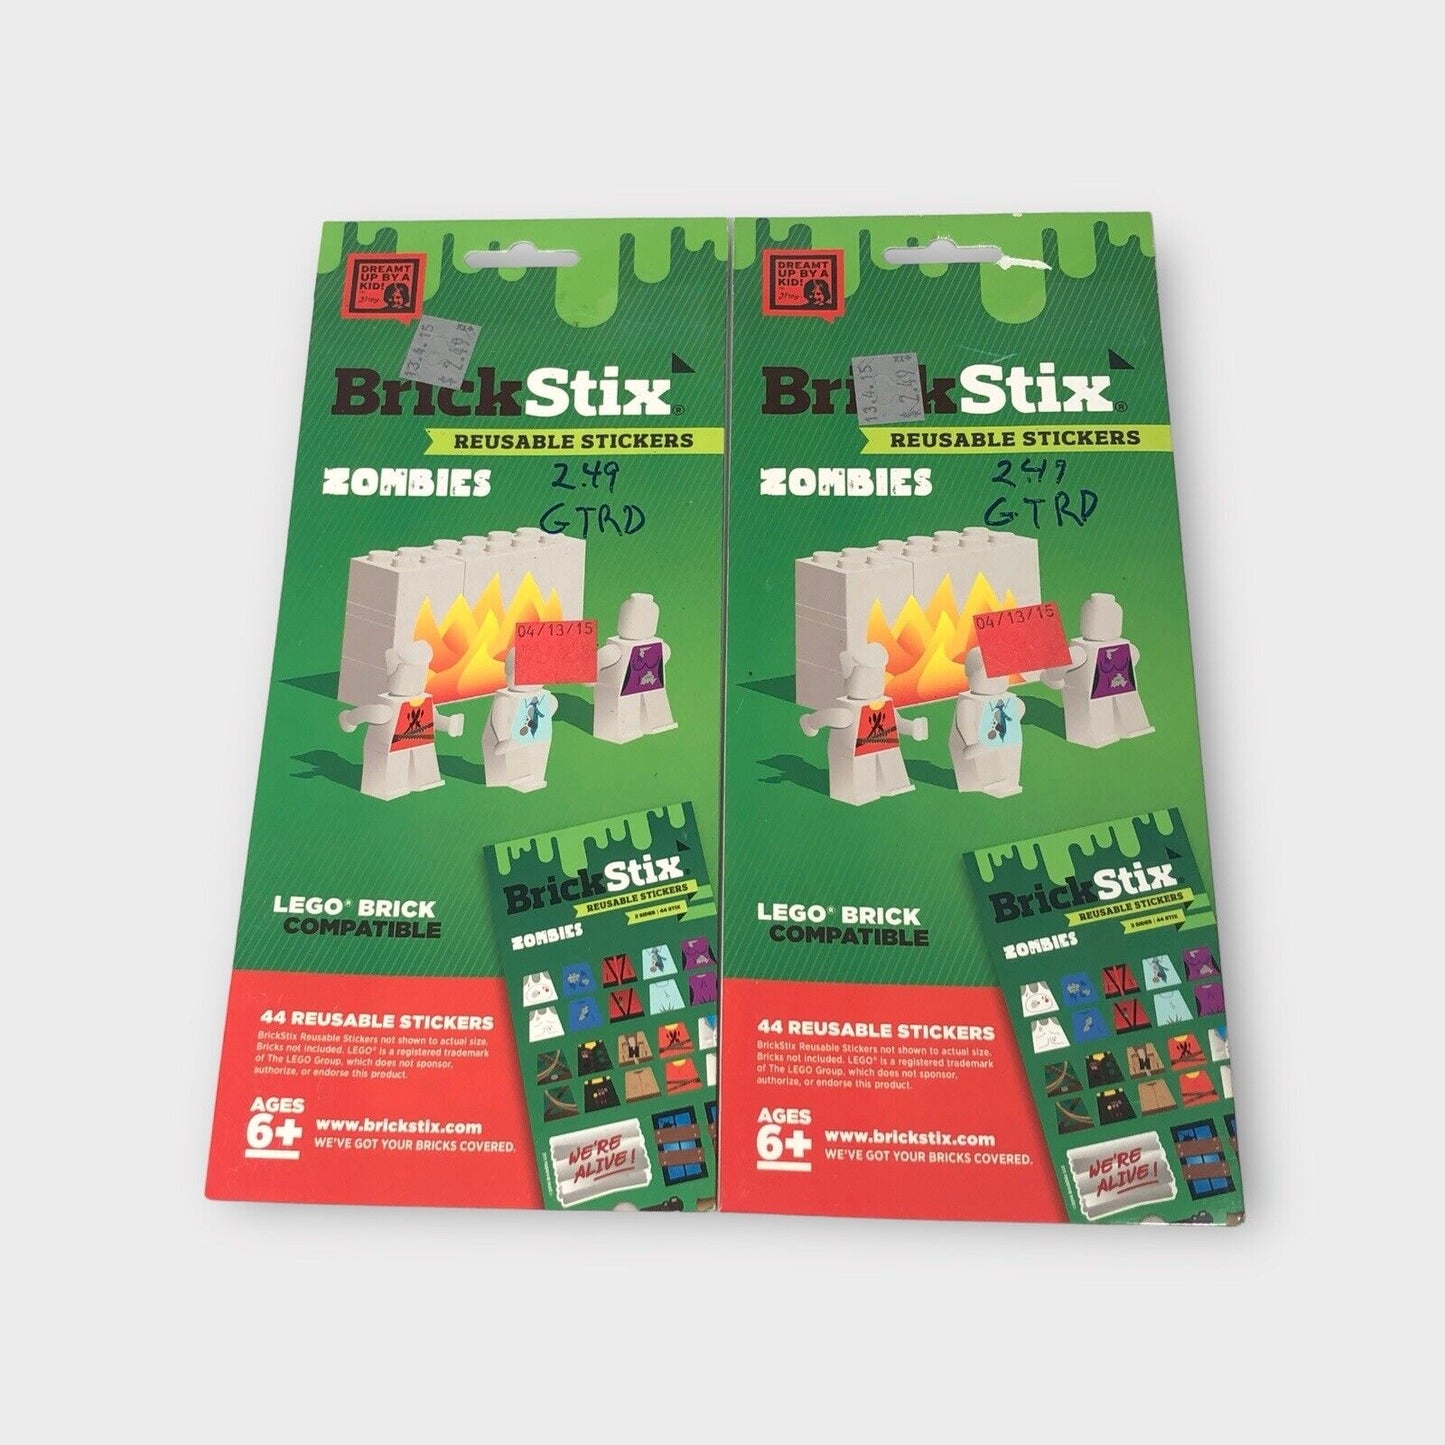 BrickStix Reusable Stickers Lego Brick Compatible Won't Residue Lot Of 5